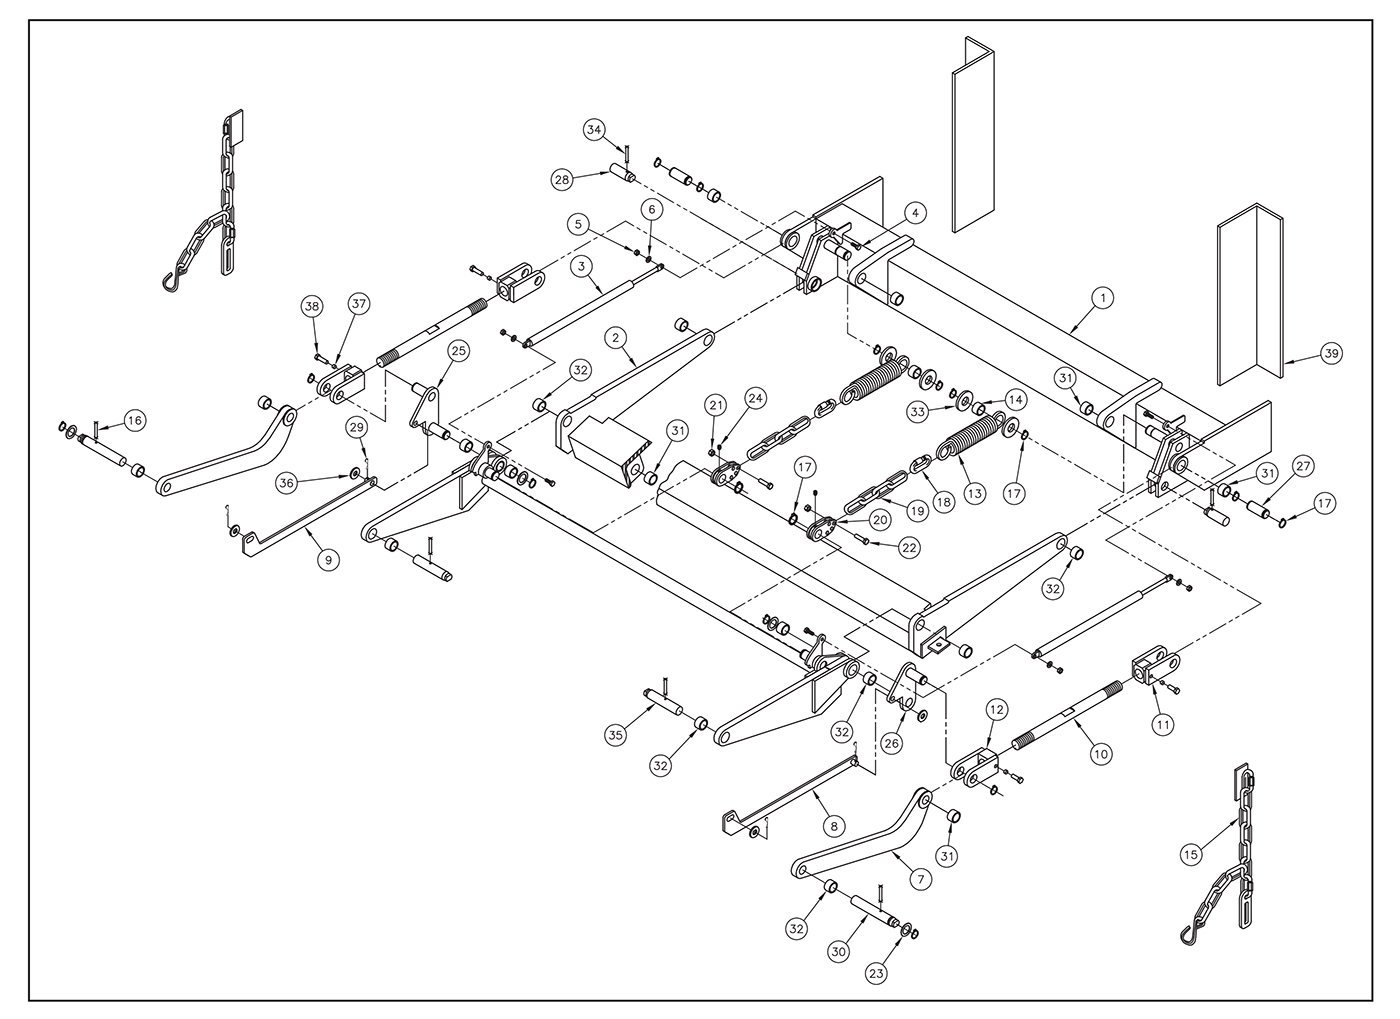 SL15 EST/SL20 EST Trunnion, Lift Arm And Idler Arm Assembly (10 Inches) Diagram